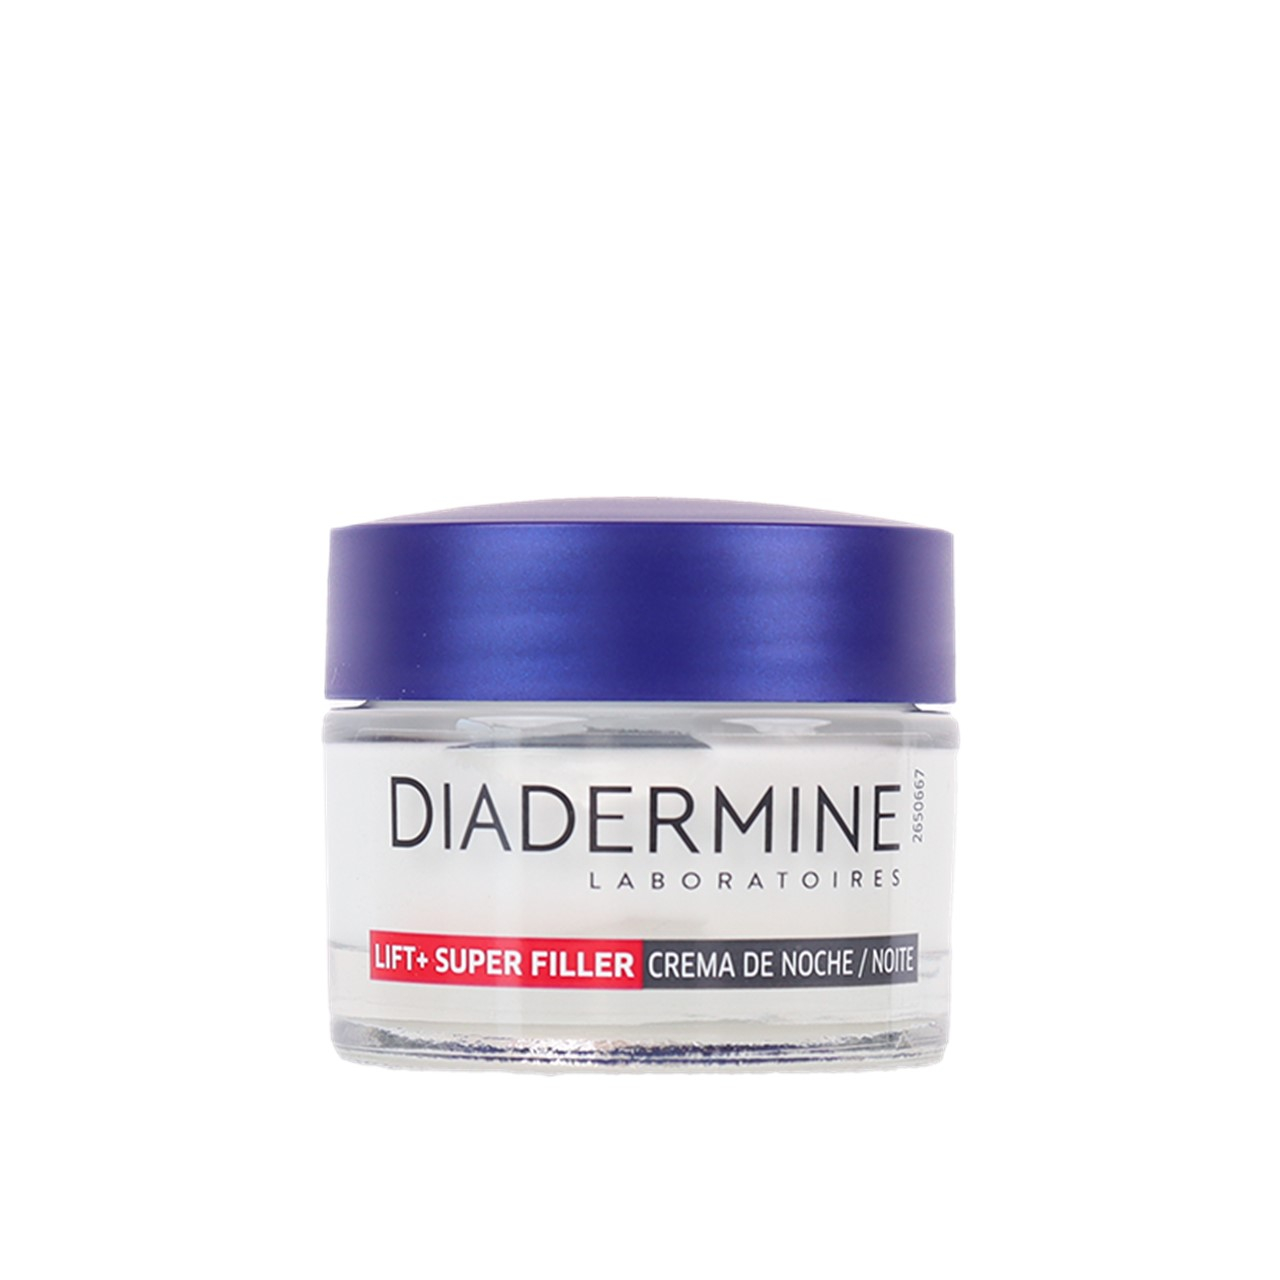 Diadermine Lift+ Super Filler Night Cream 50ml (1.69fl oz)